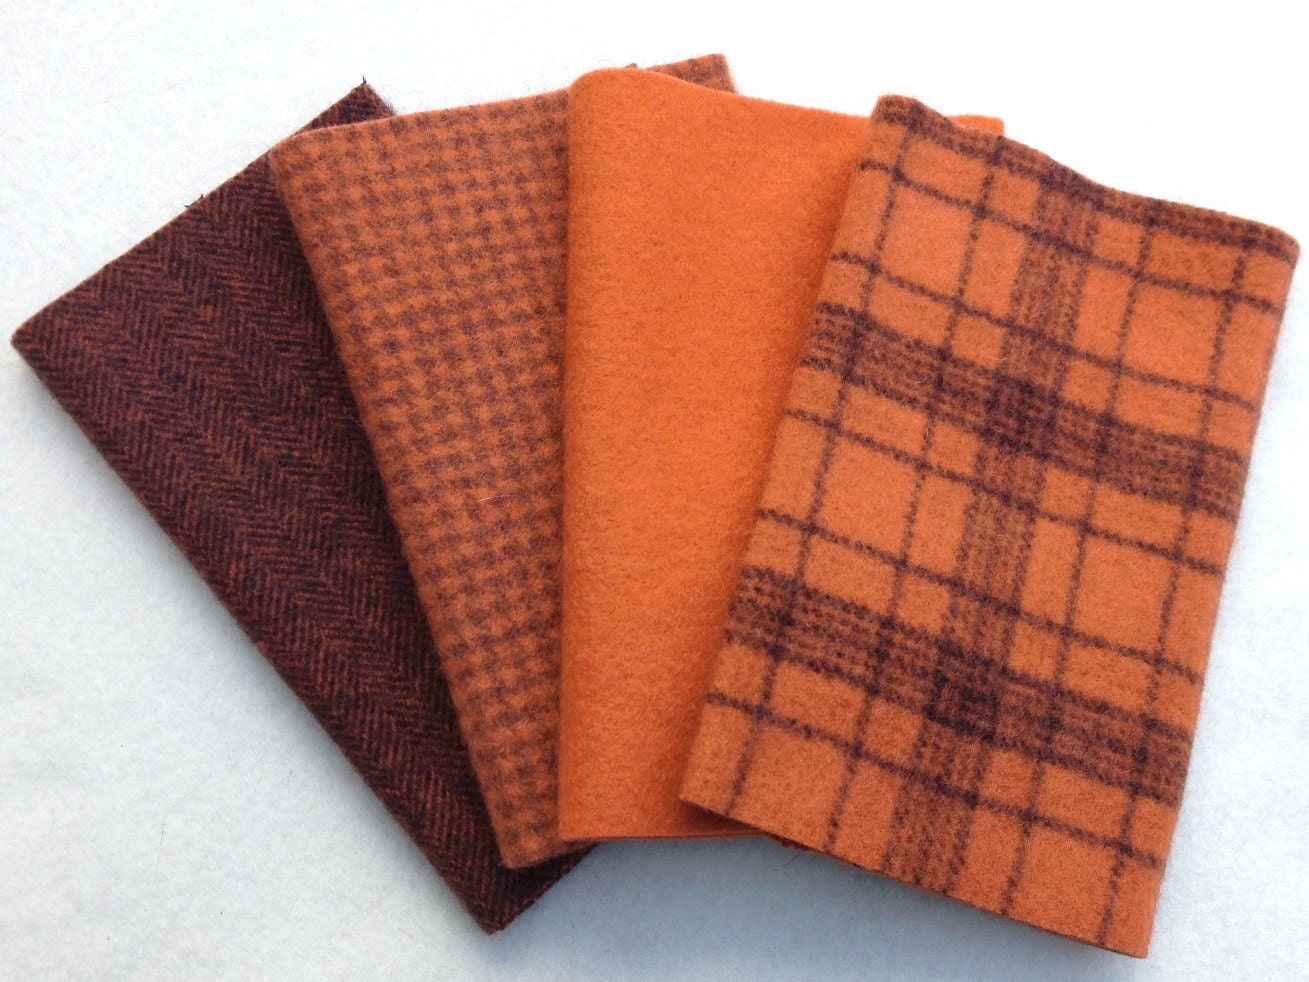 Hand Dyed Wool Felt, PUMPKIN , Four 6.5" x 16" pieces in Rich, Warm Oranges - RubyMountainDyeWorks